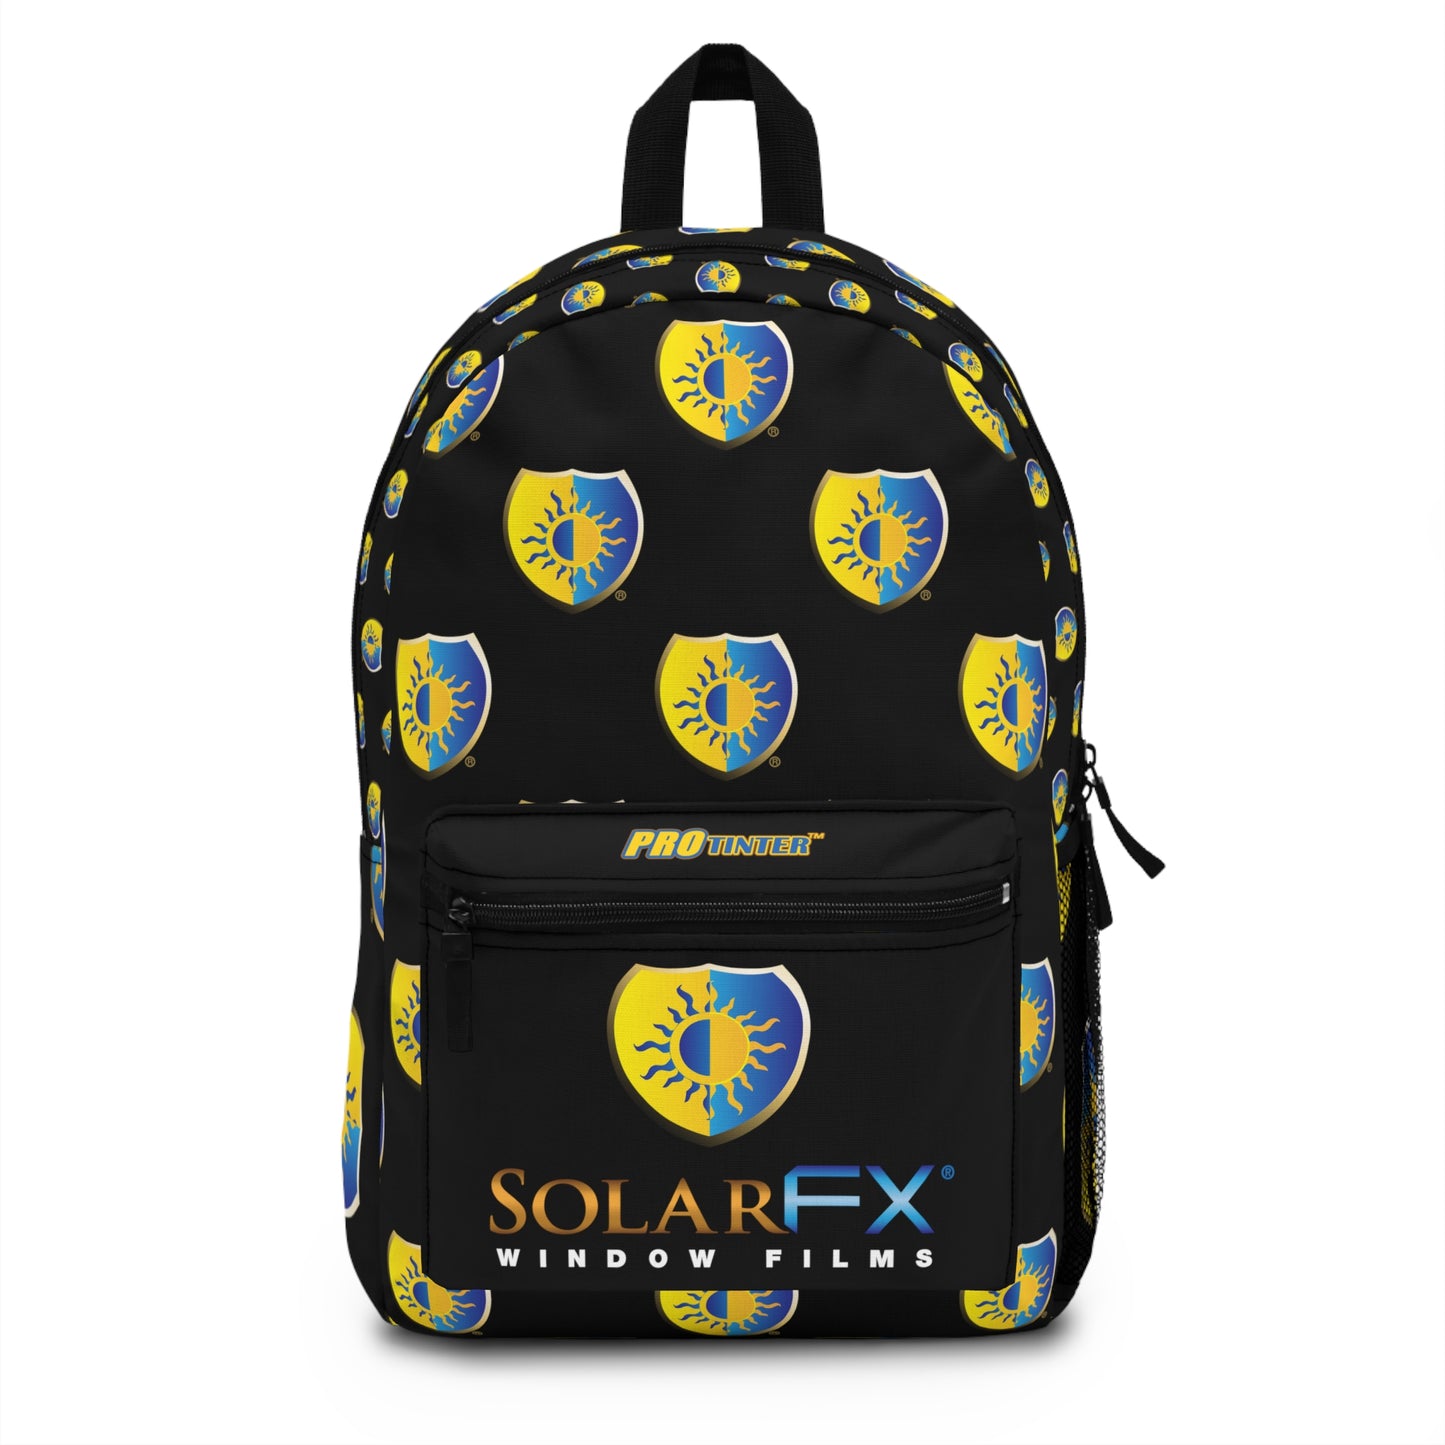 SolarFX PRO Tinter Edition Backpack